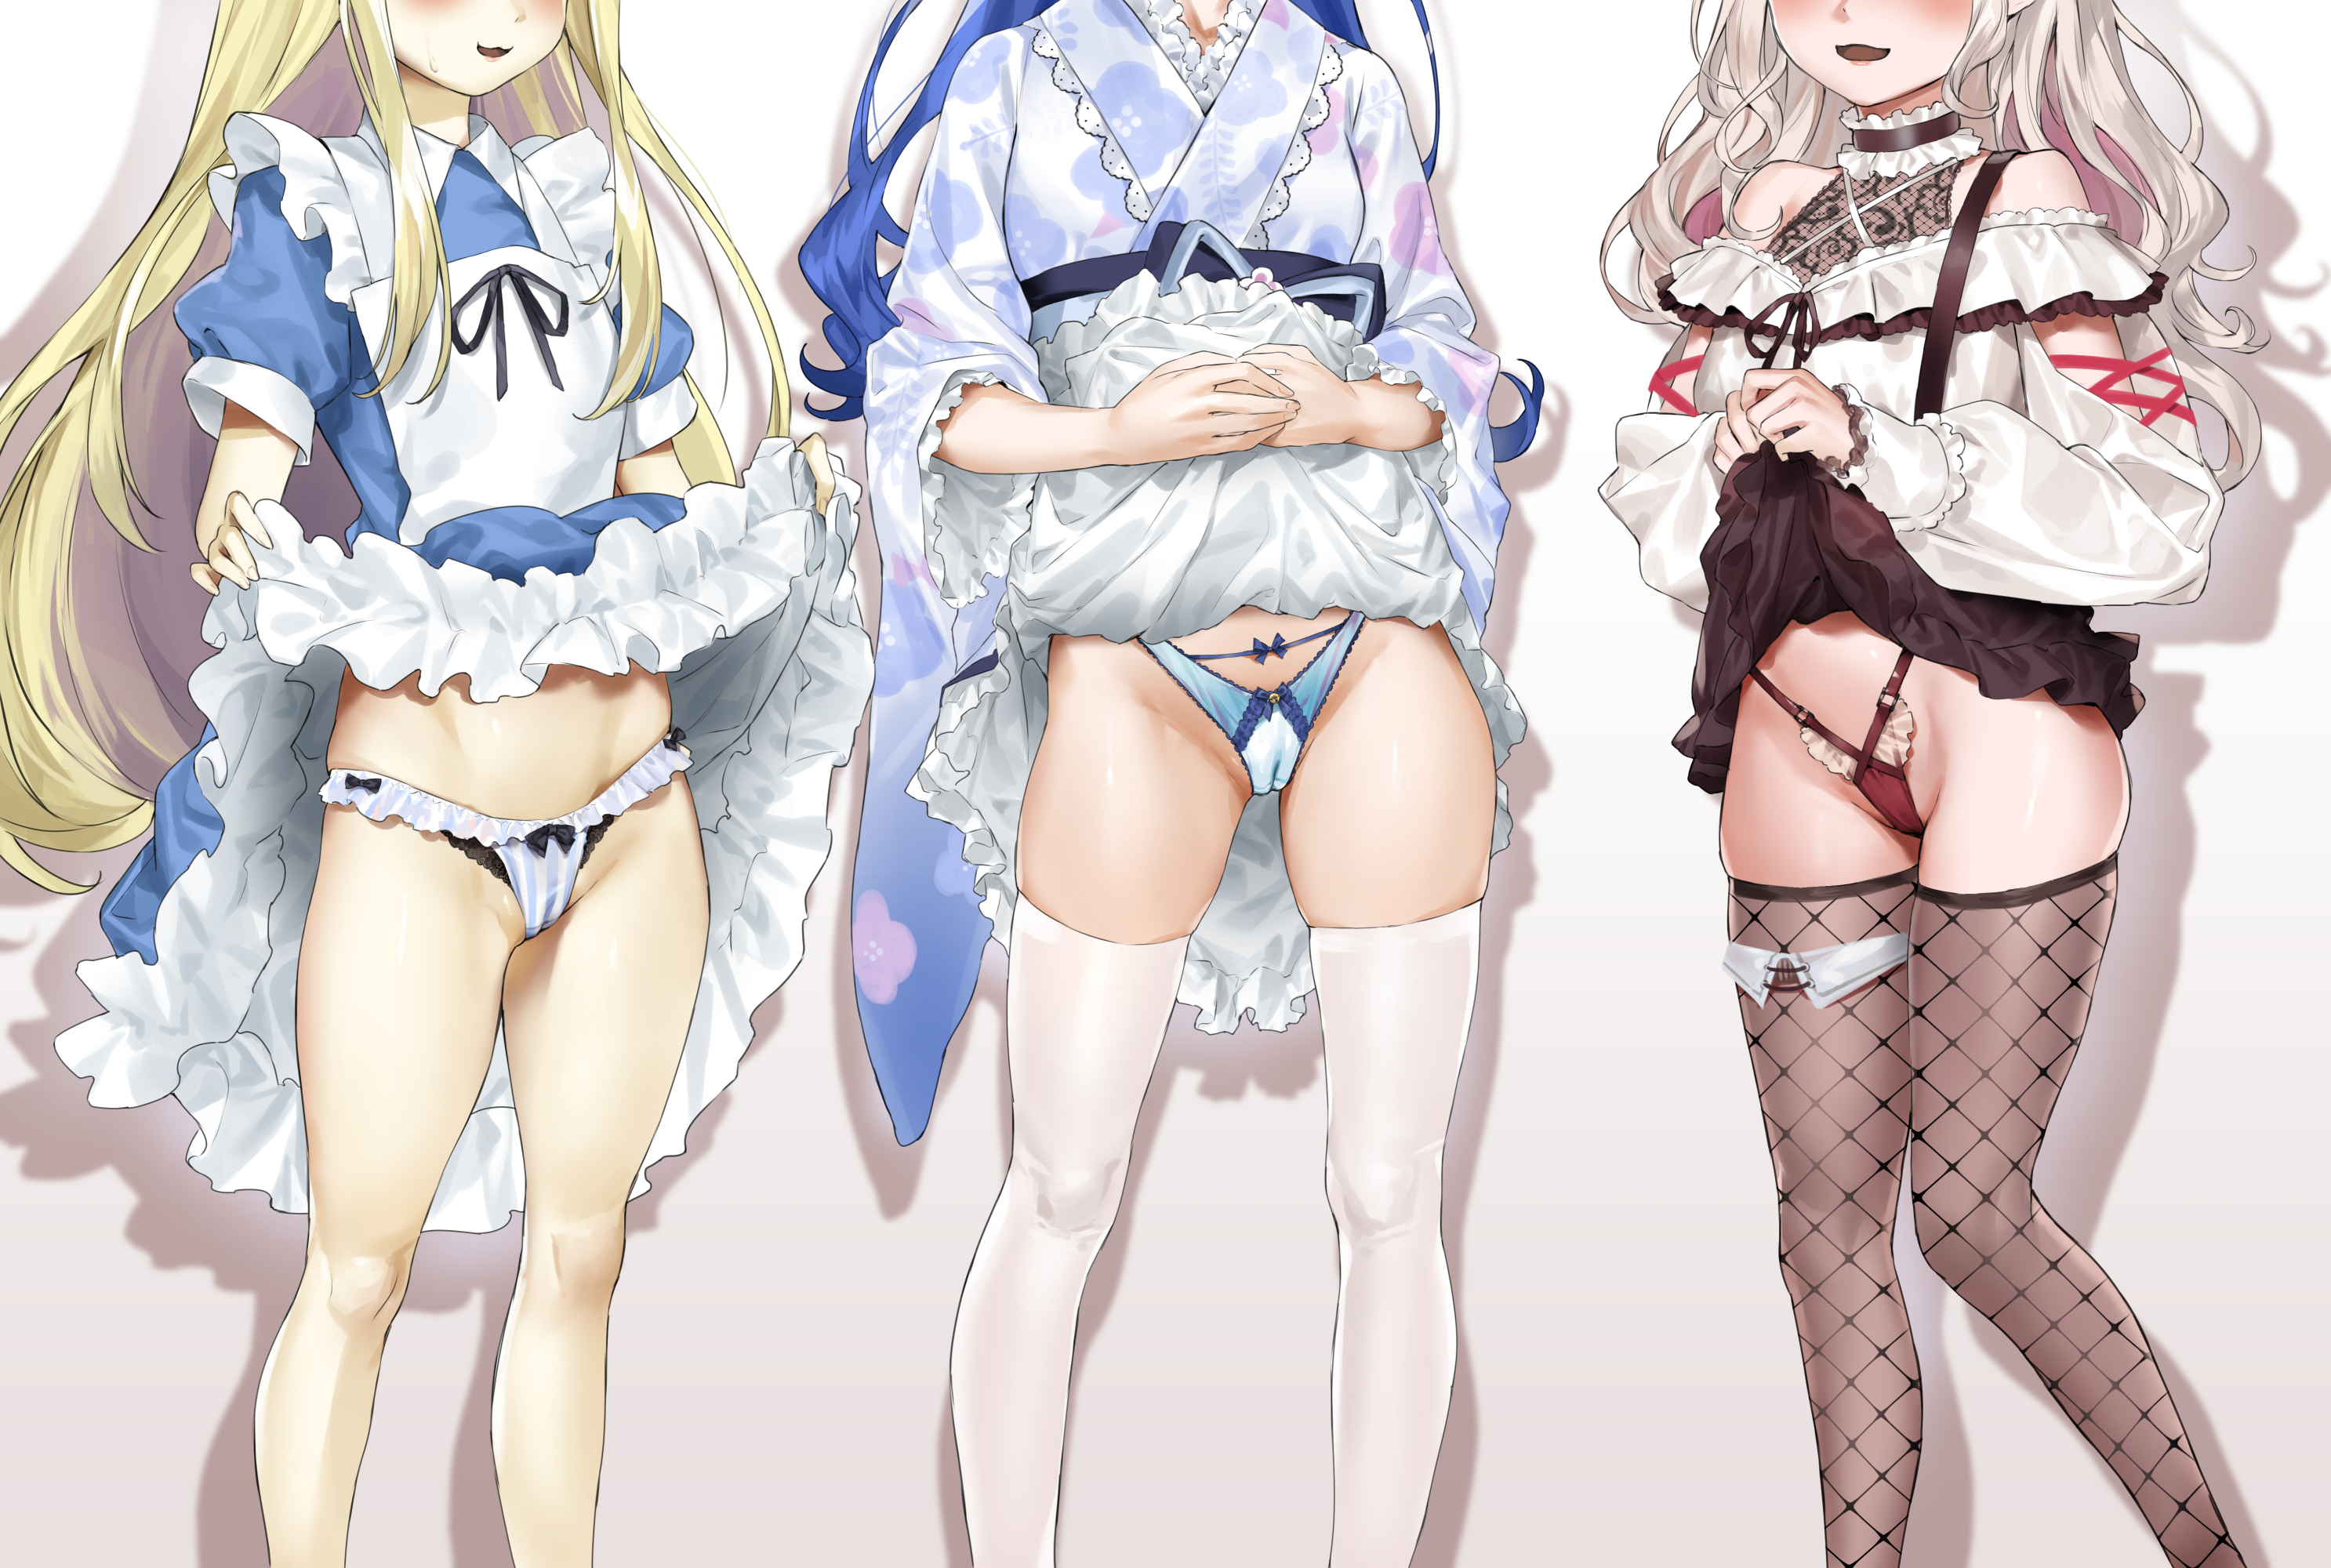 Anime 2973x2000 anime girls upskirt panties Alice in Wonderland cameltoe lifting skirt stockings fishnet long hair minimalism white background simple background Kuroi Suna loli petite